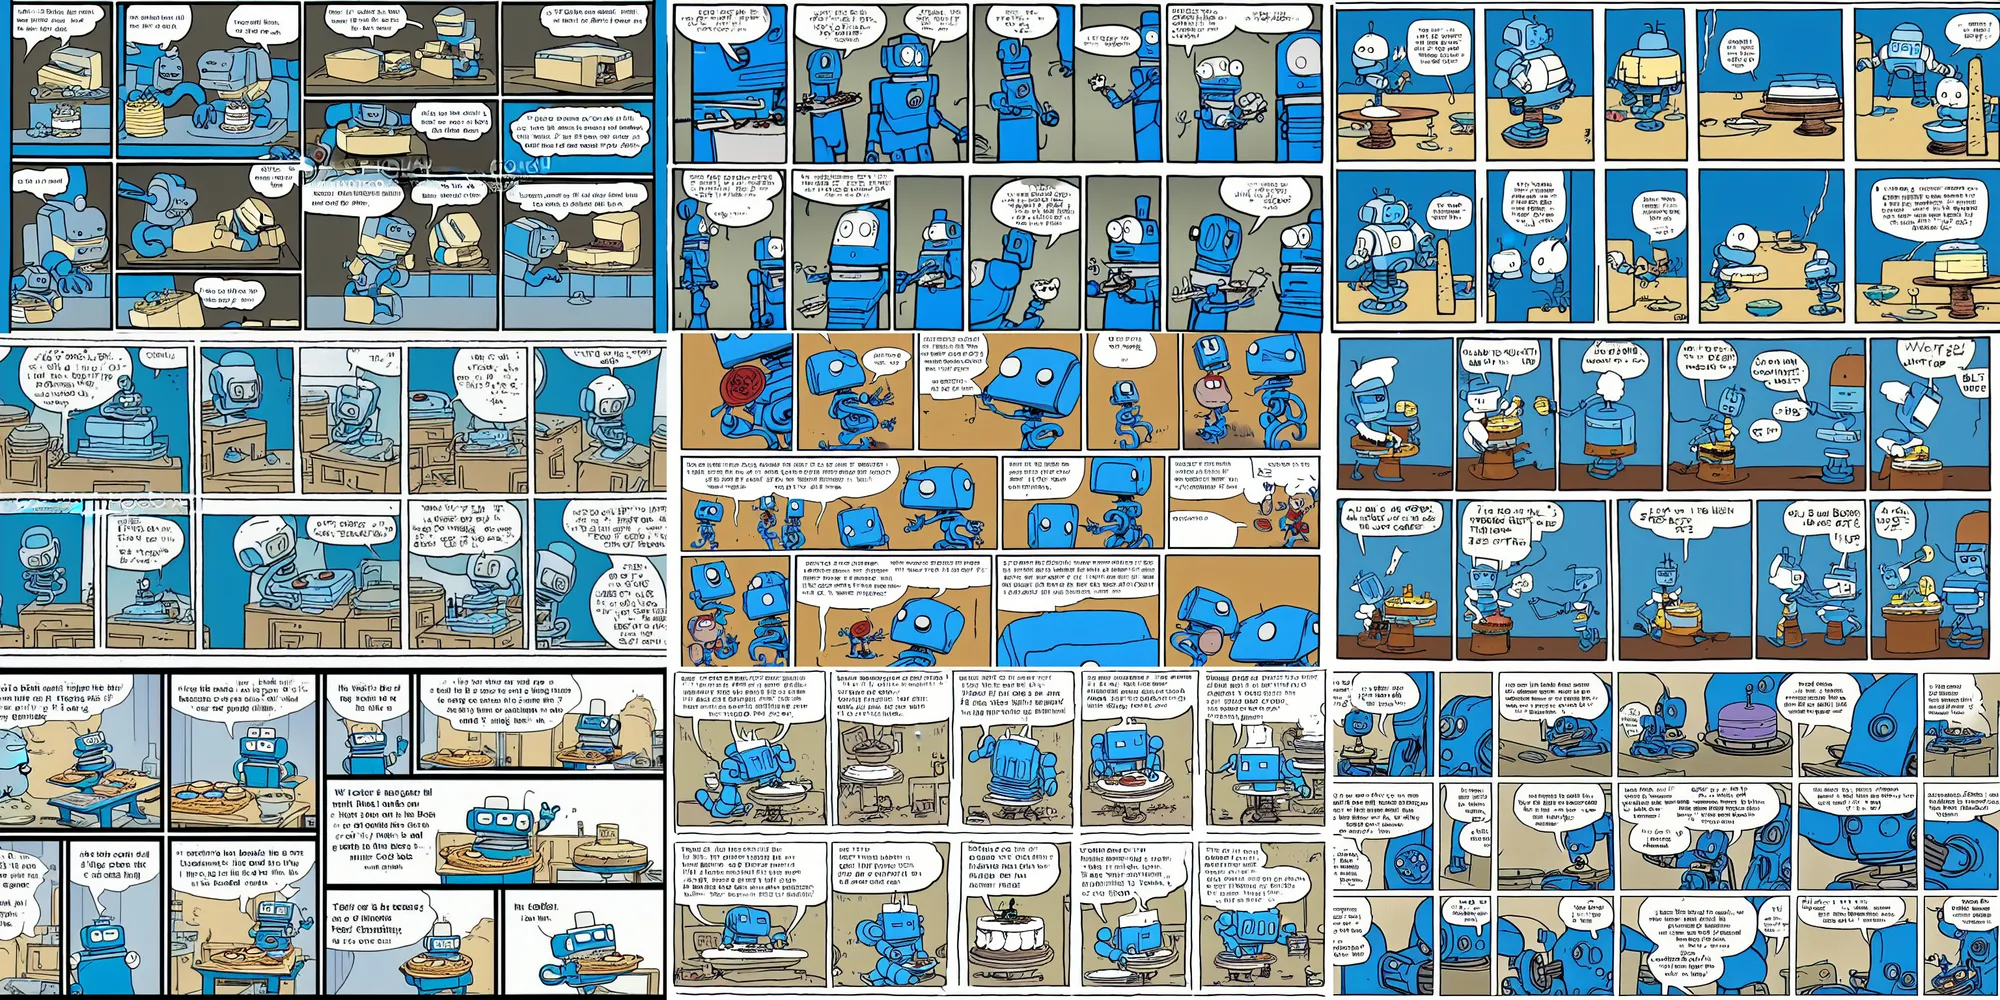 Prompt: short cartoon strip, blue robot bakes a cake, by bill watterson